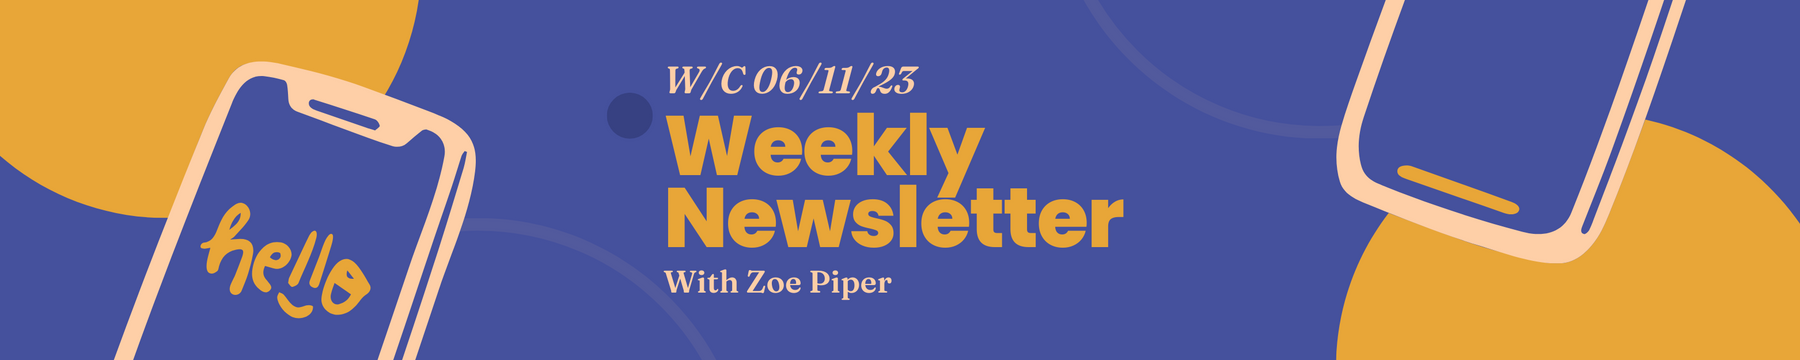 Weekly Newsletter W/C 6/11/23